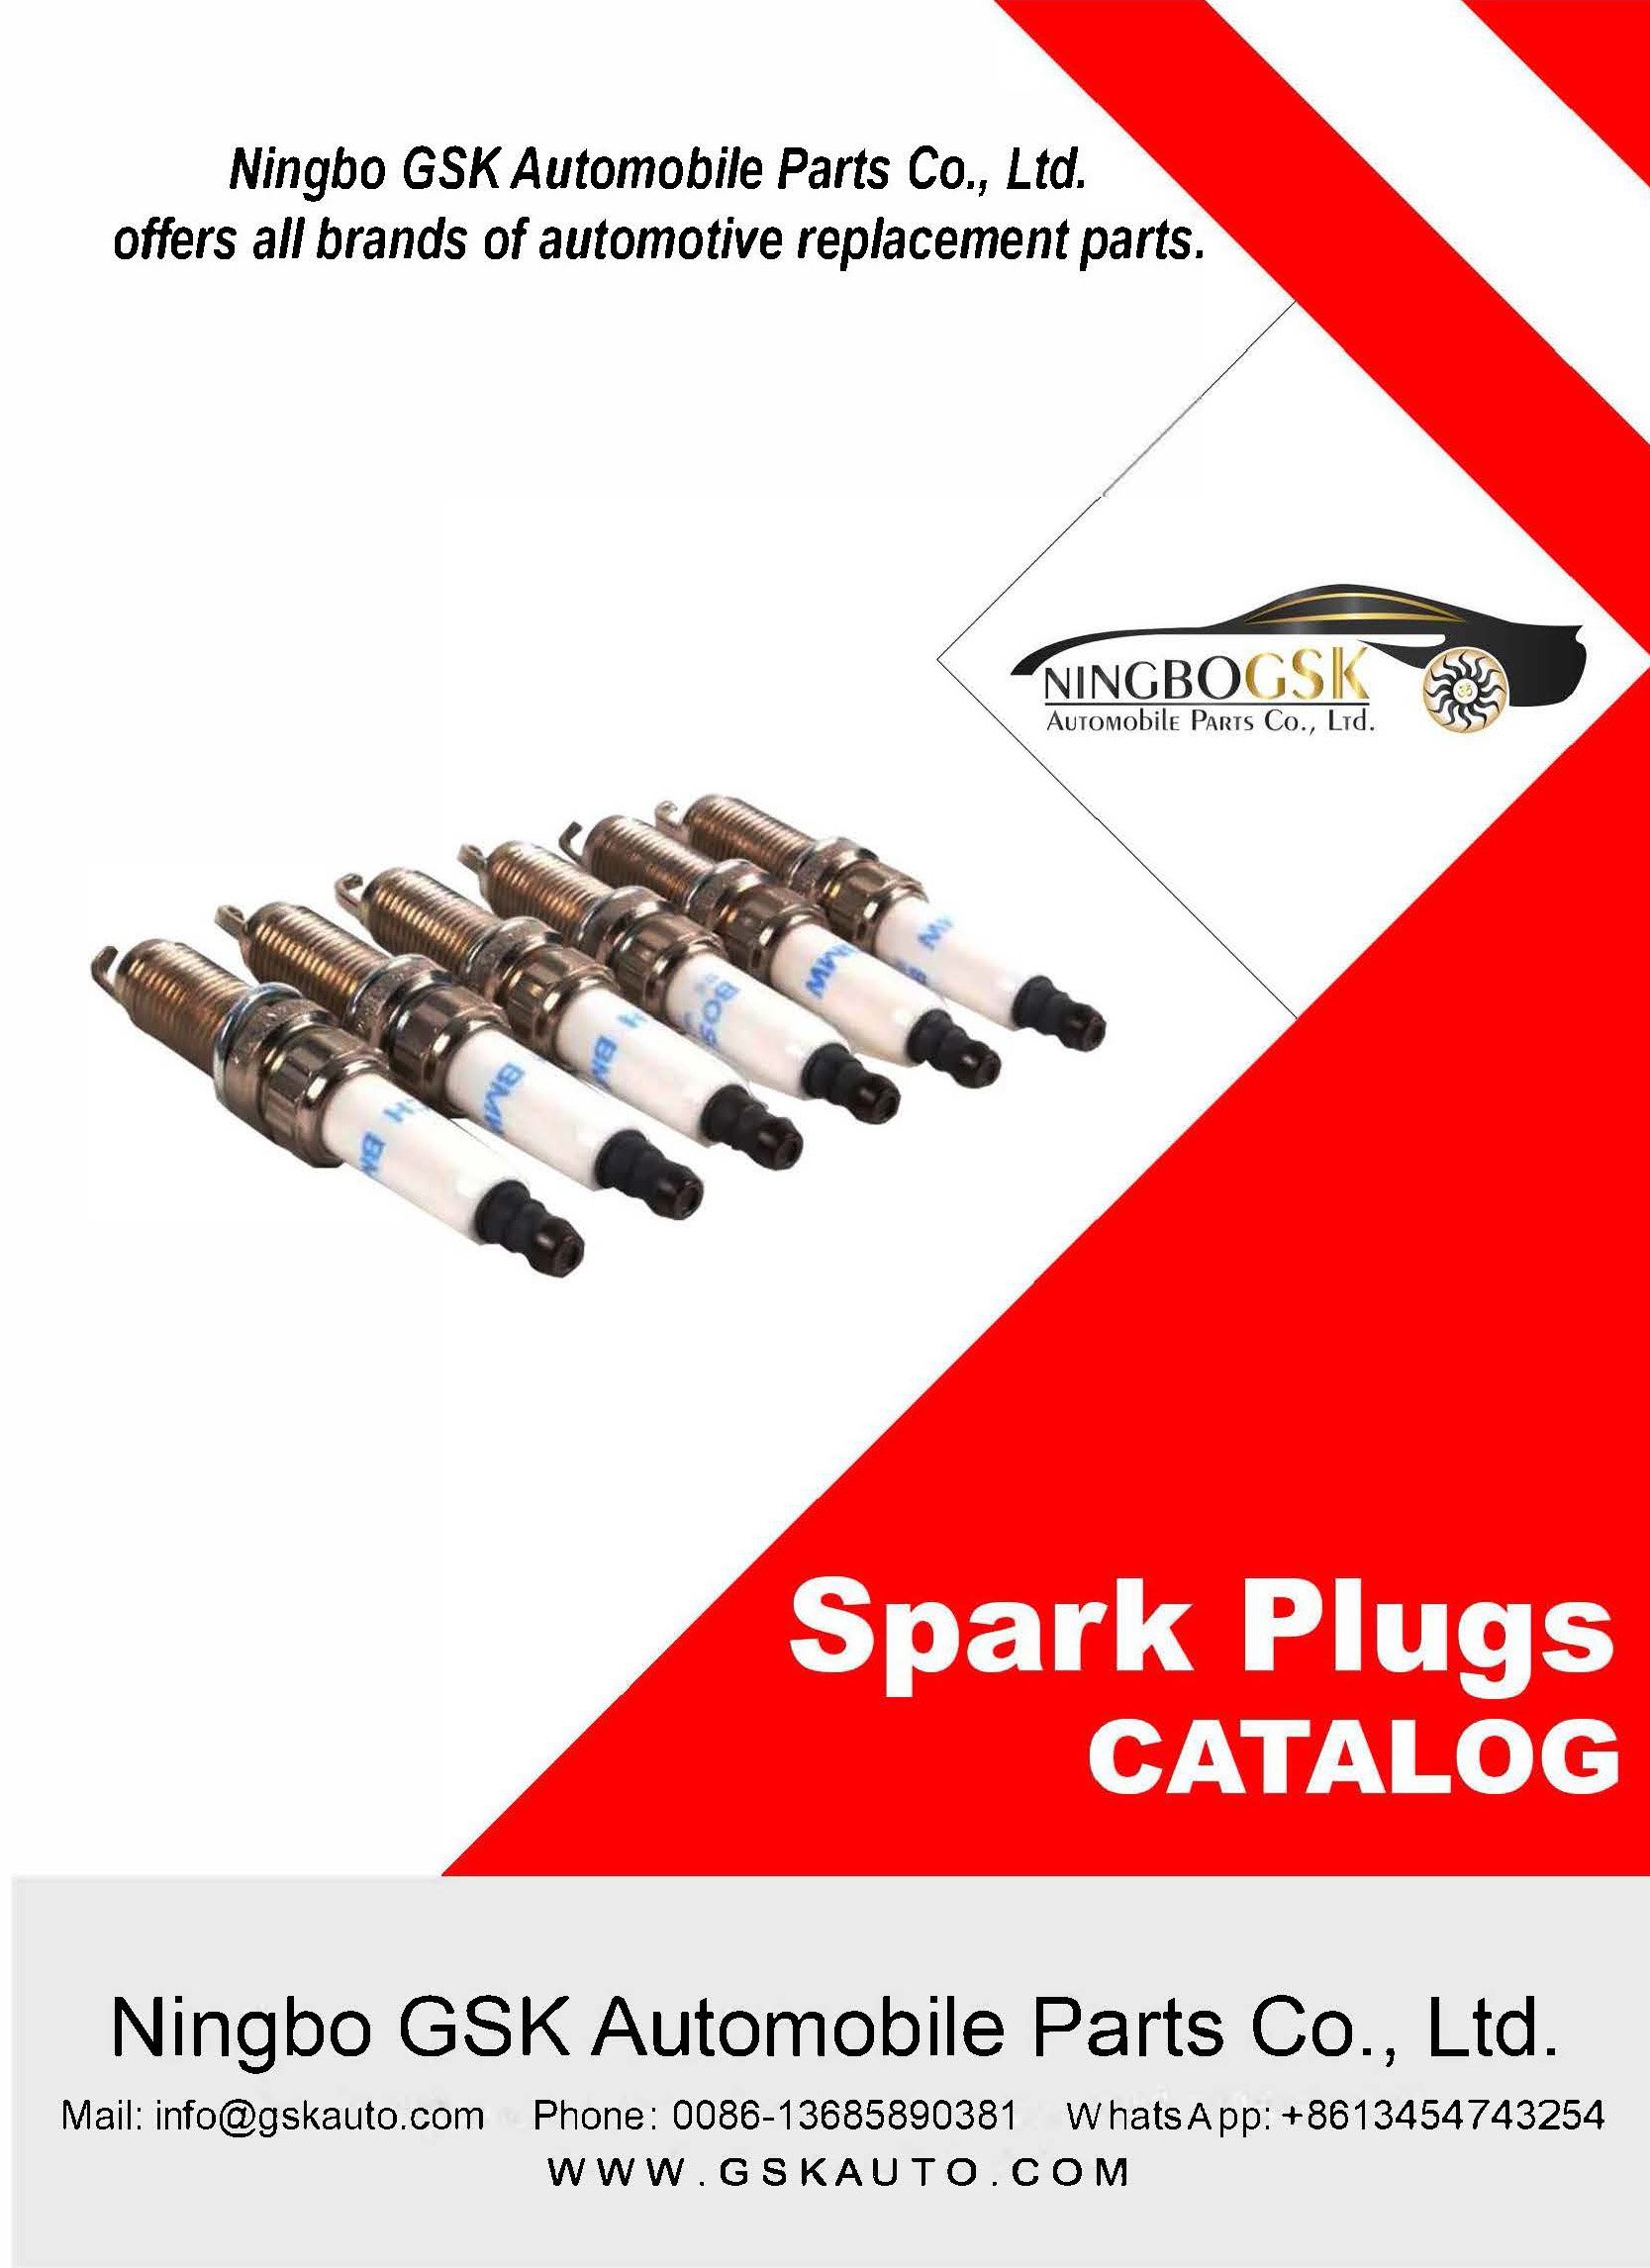 Spark Plugs Catalog